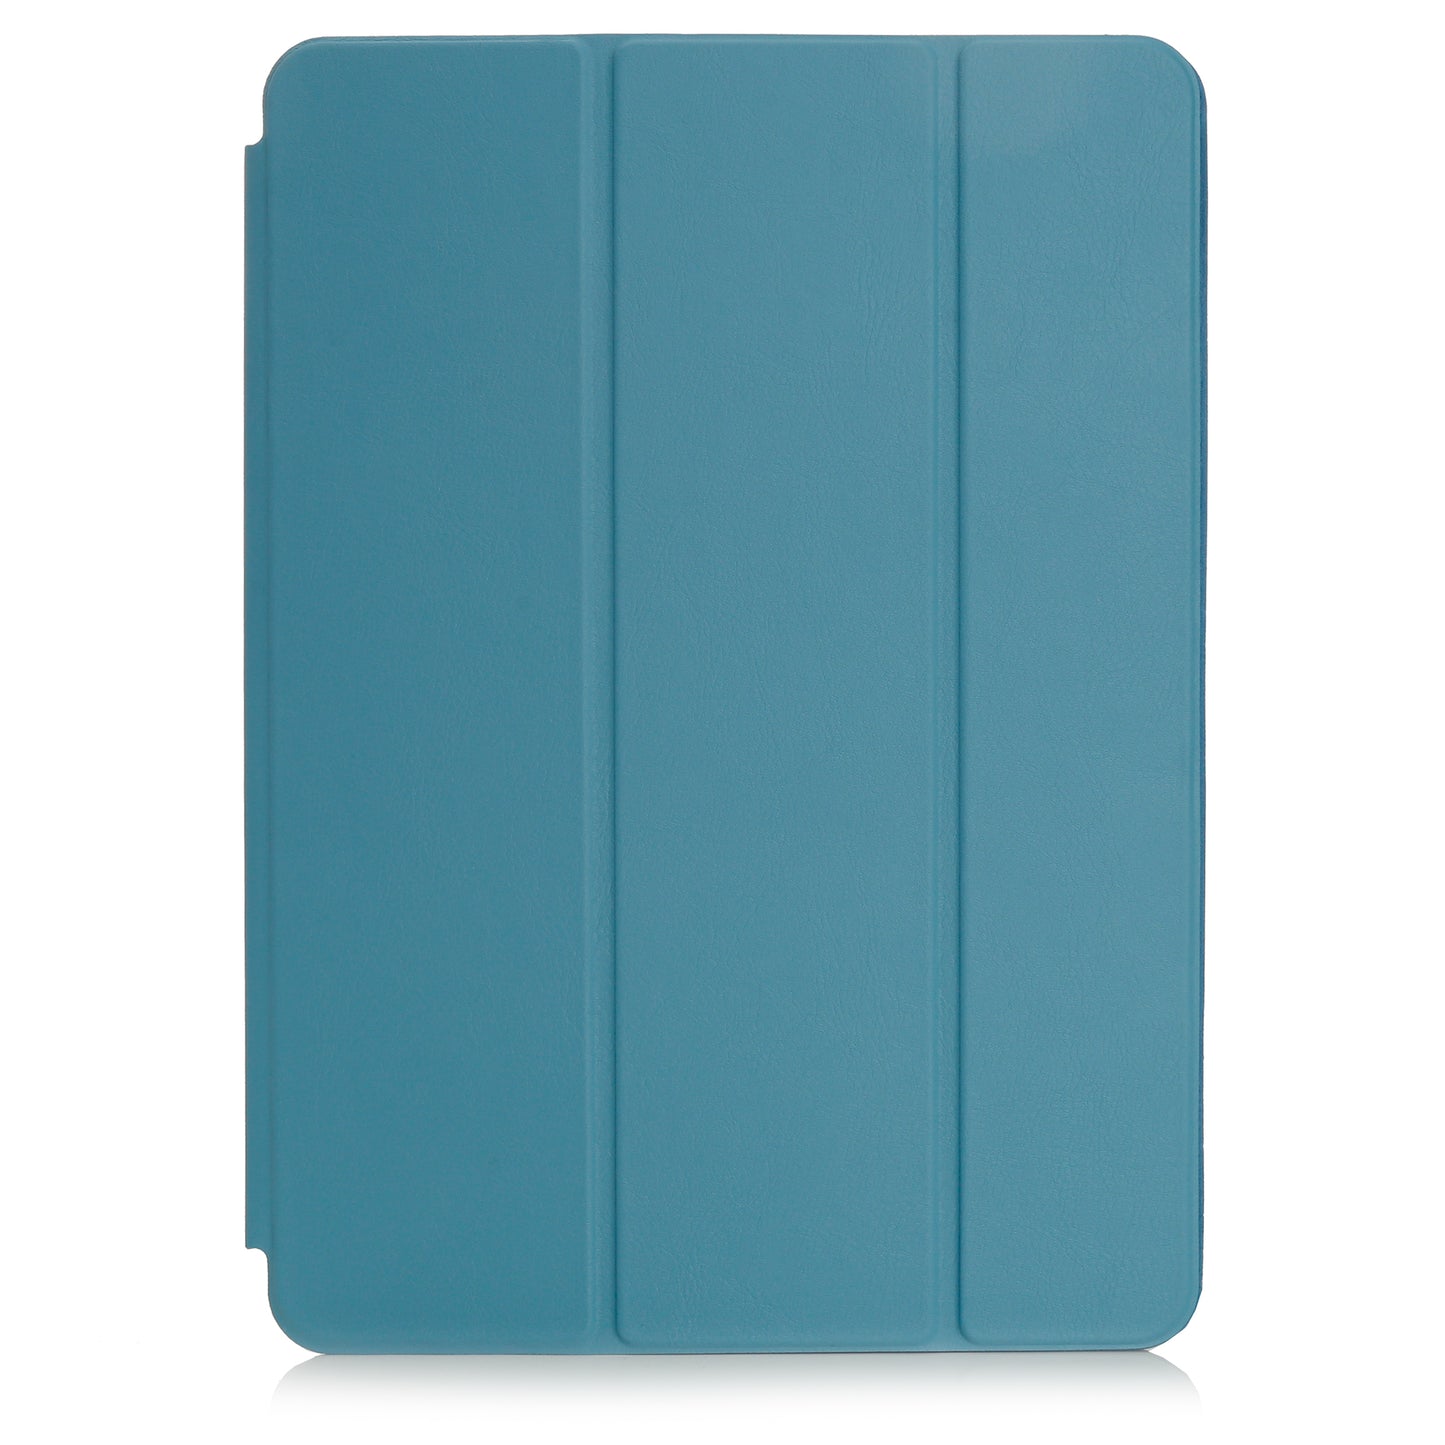 iCEO iPad Pro 9,7" SmartCover Case